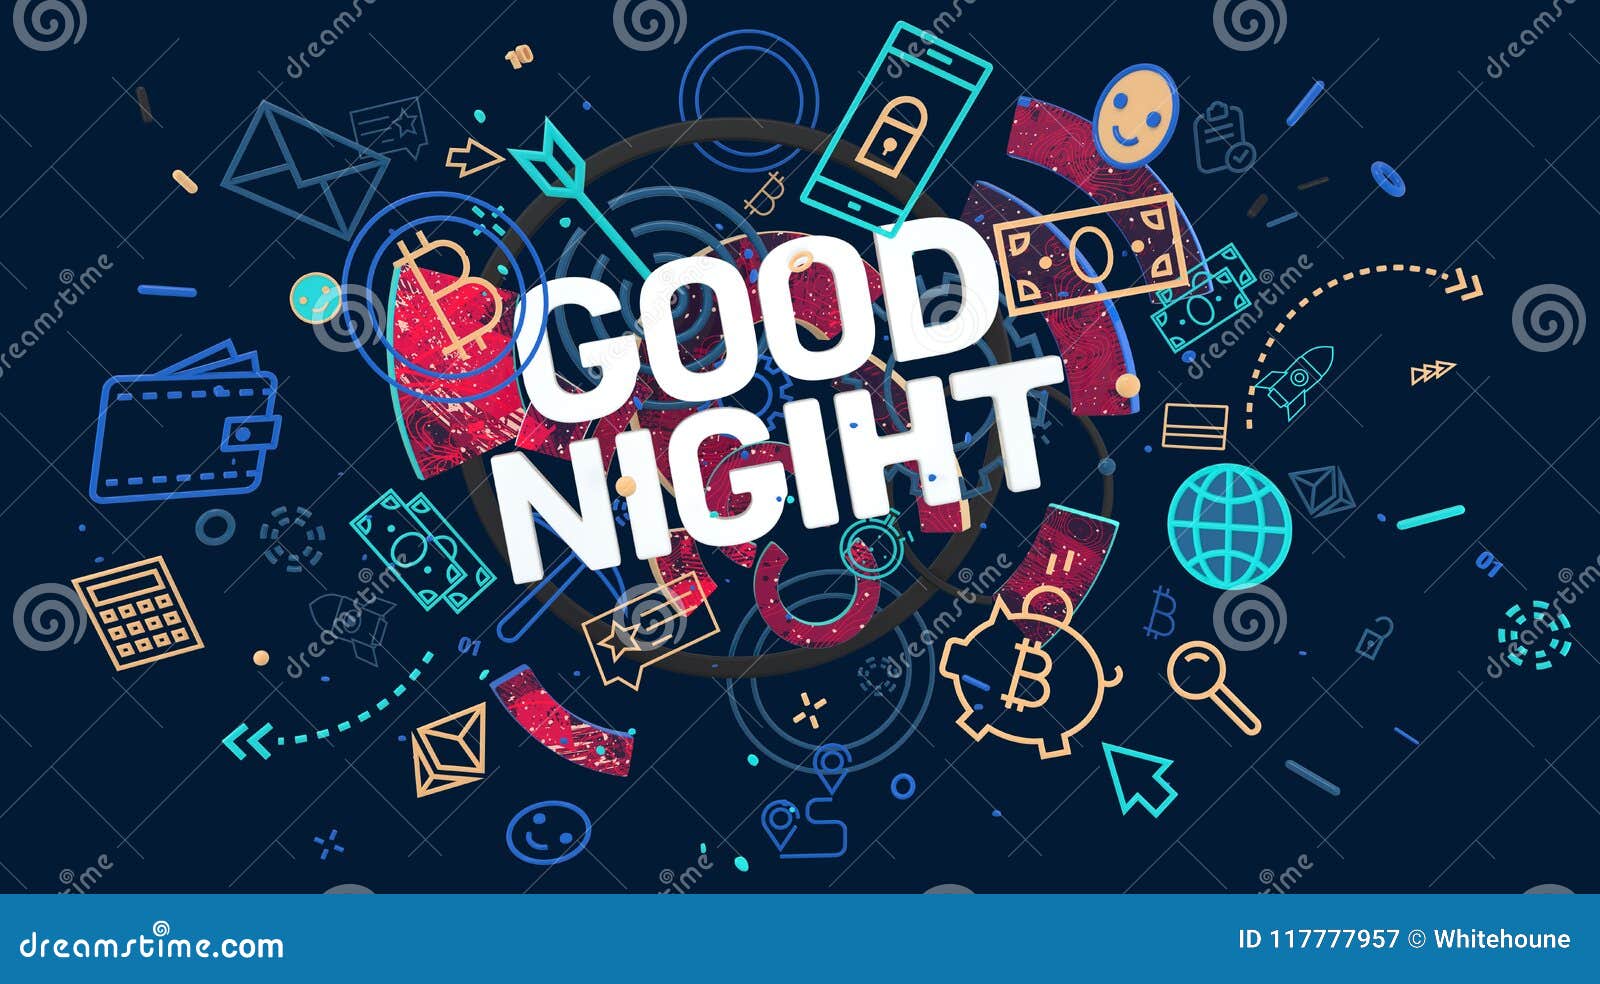 Good night wishes stock image. Image of night, trendy - 117777957